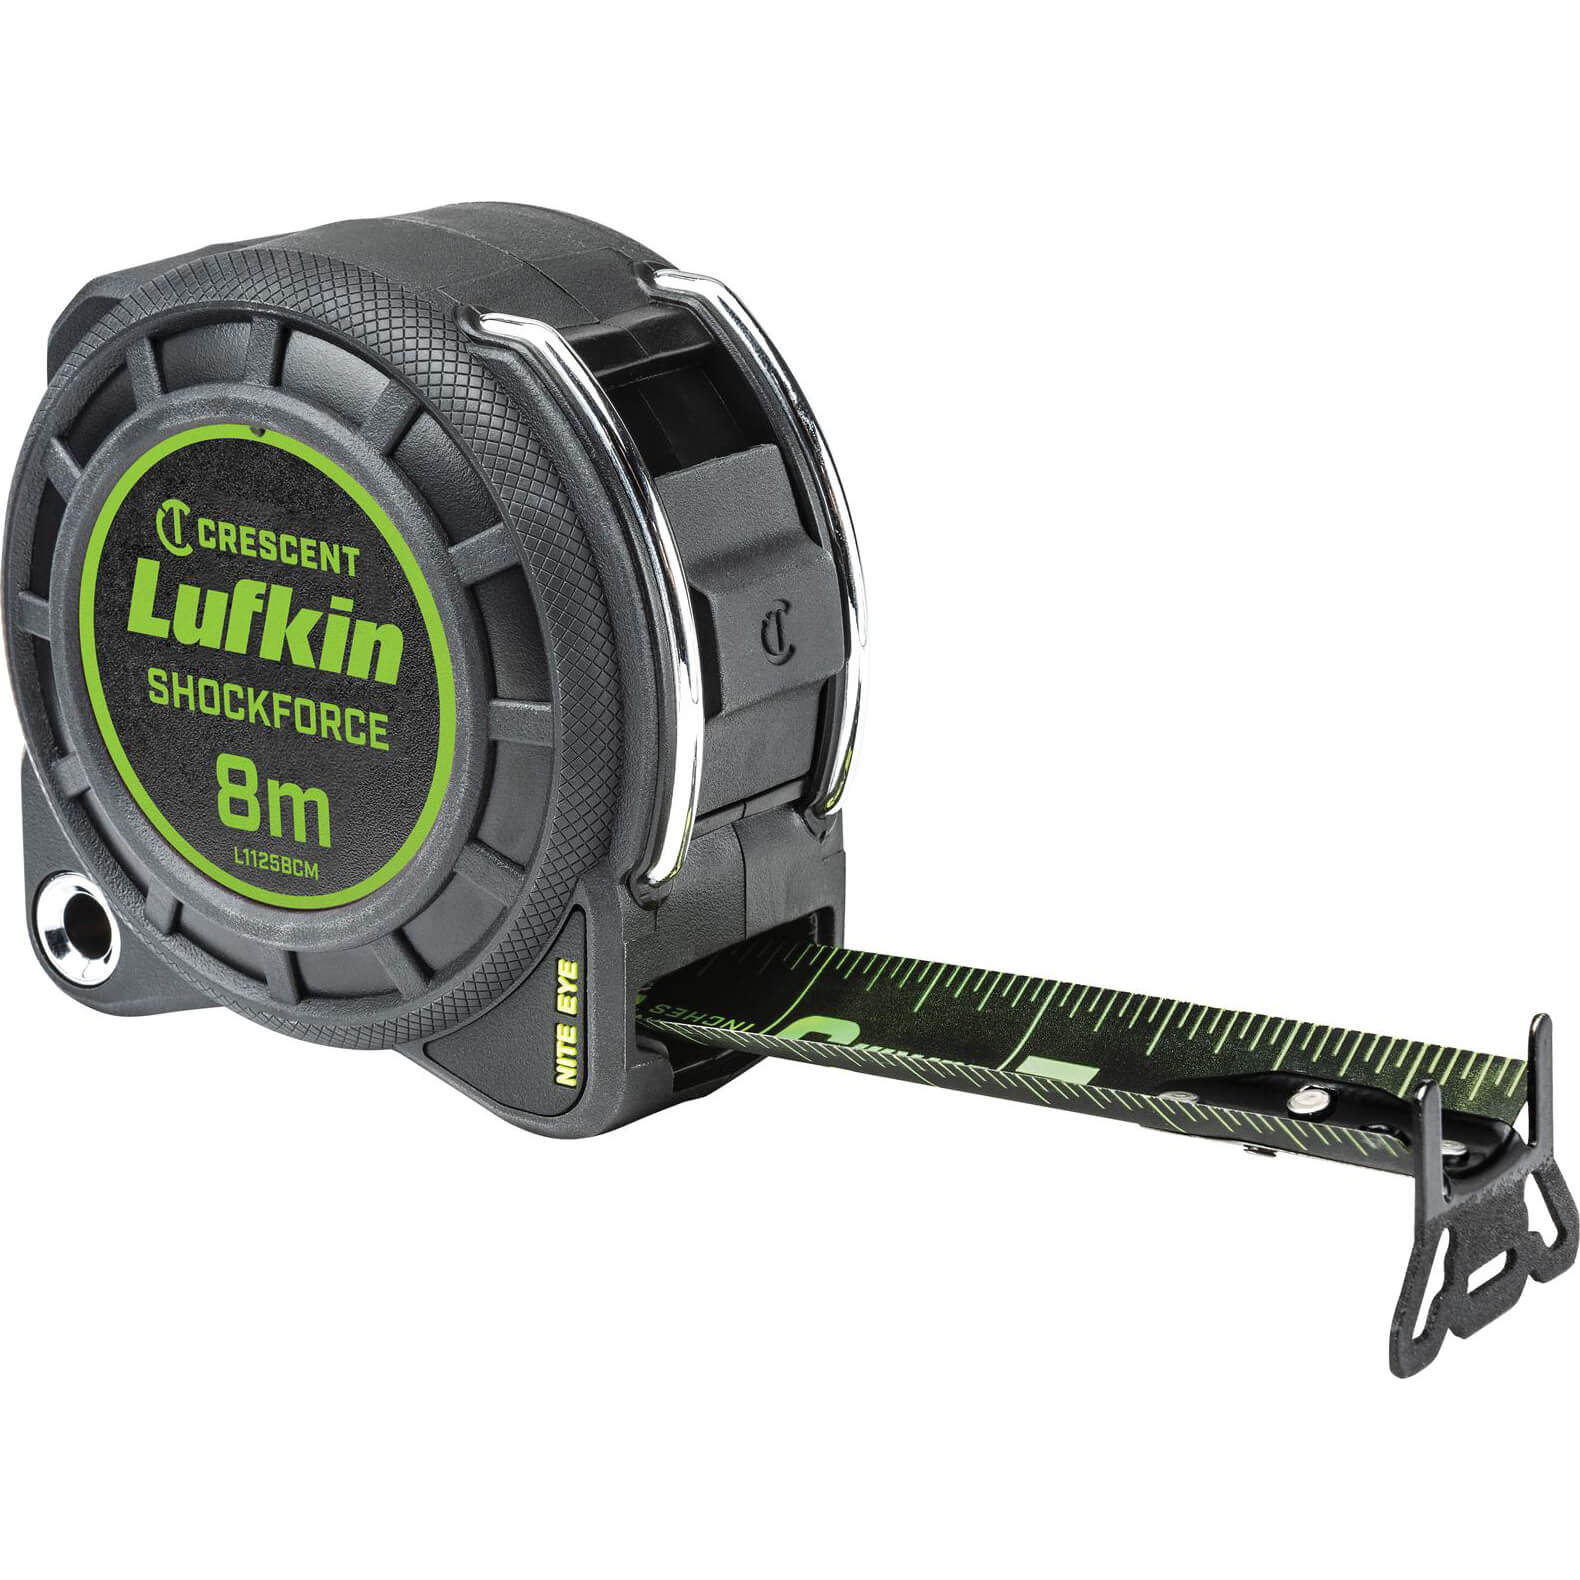 Crescent Lufkin Shockforce Night Eye Dual Sided Tape Measure Metric 8m 30mm